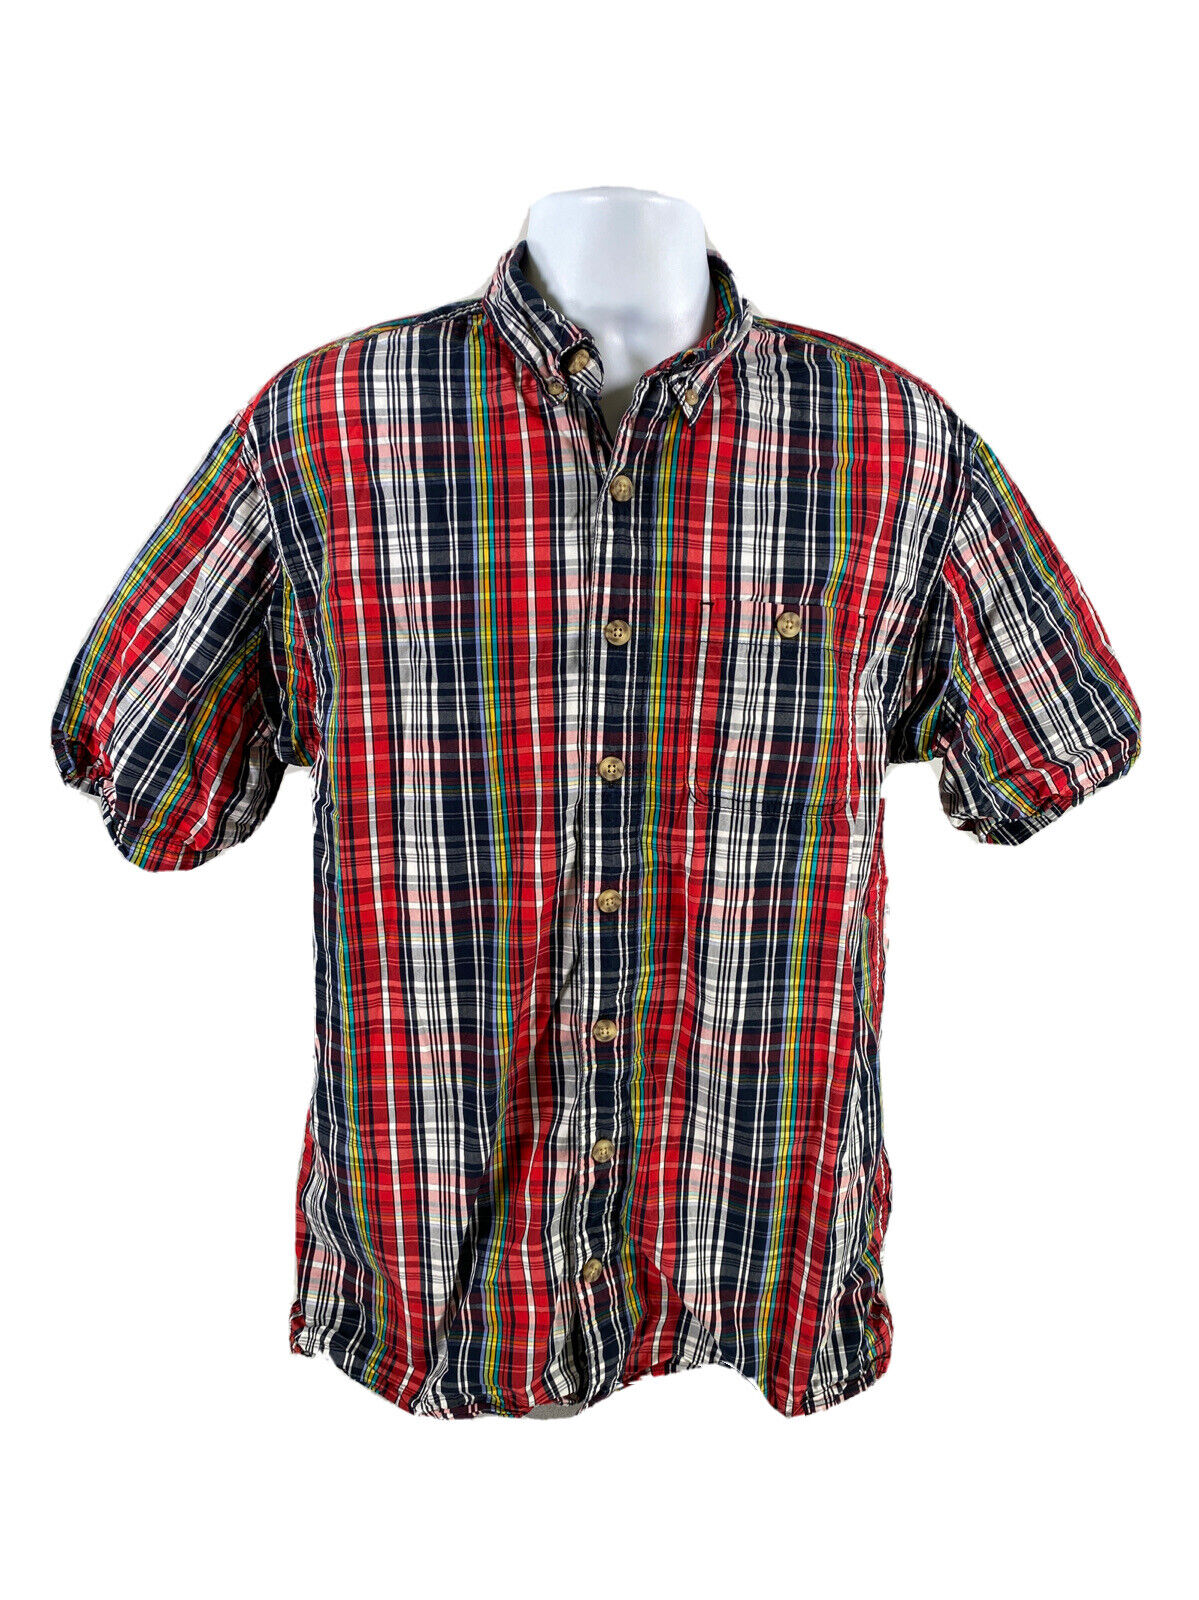 Duluth Trading Men's Blue/Red Short Sleeve Button Up Shirt - M Tall